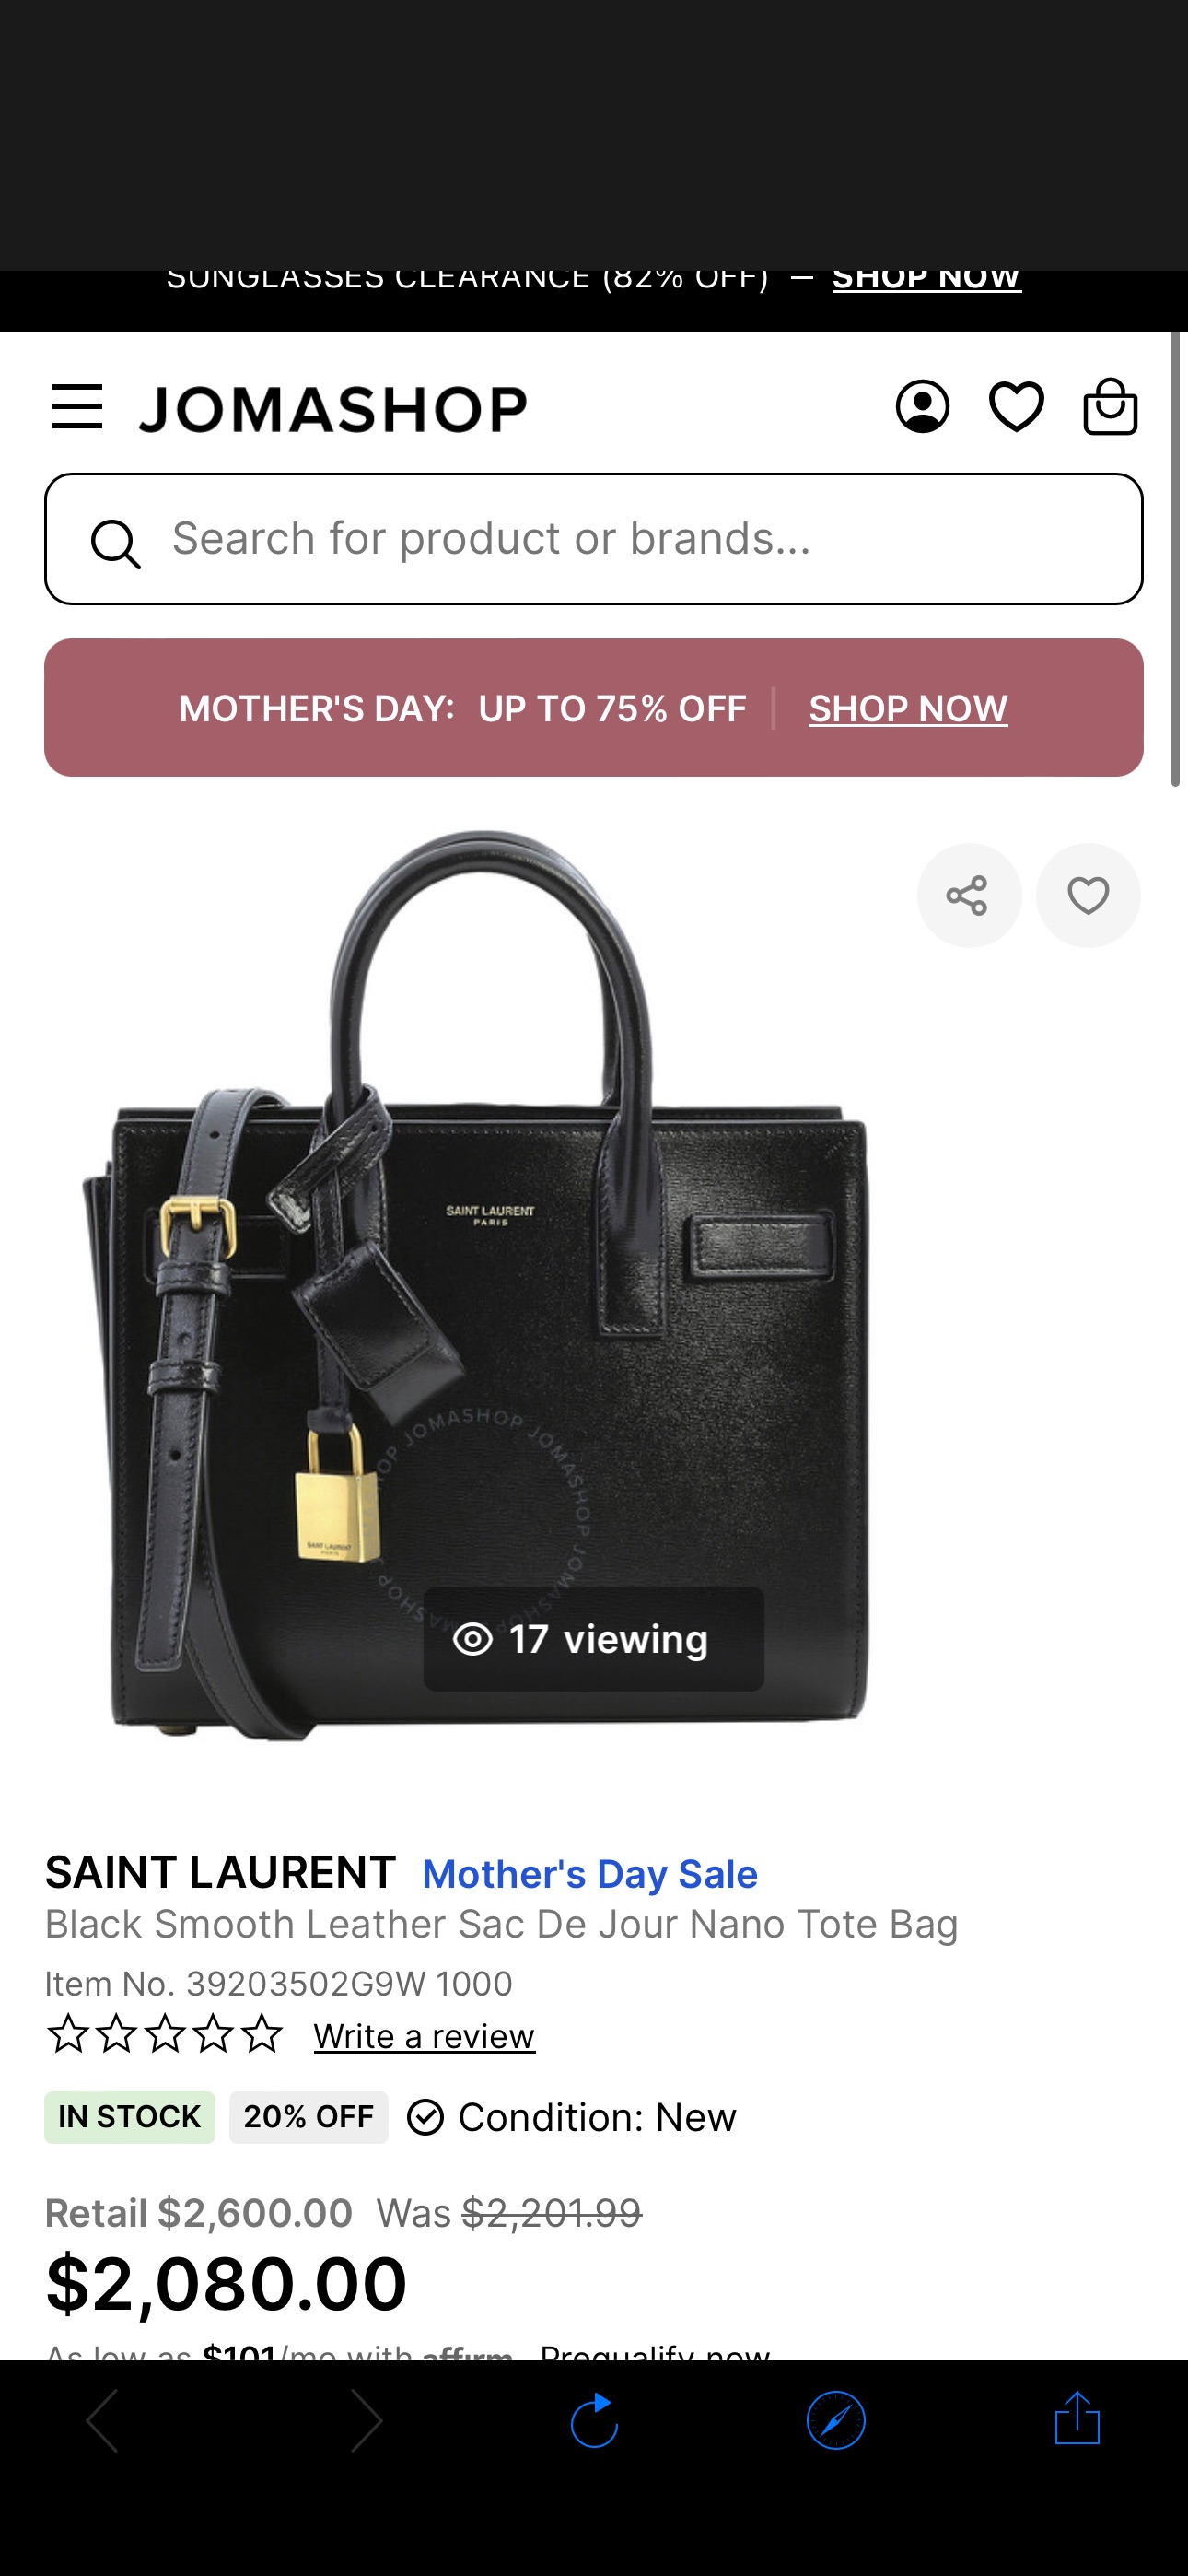 Saint Laurent Black Smooth Leather Sac De Jour Nano Tote Bag 39203502G9W 1000 101076075012 - Handbags, YSL - Jomashop